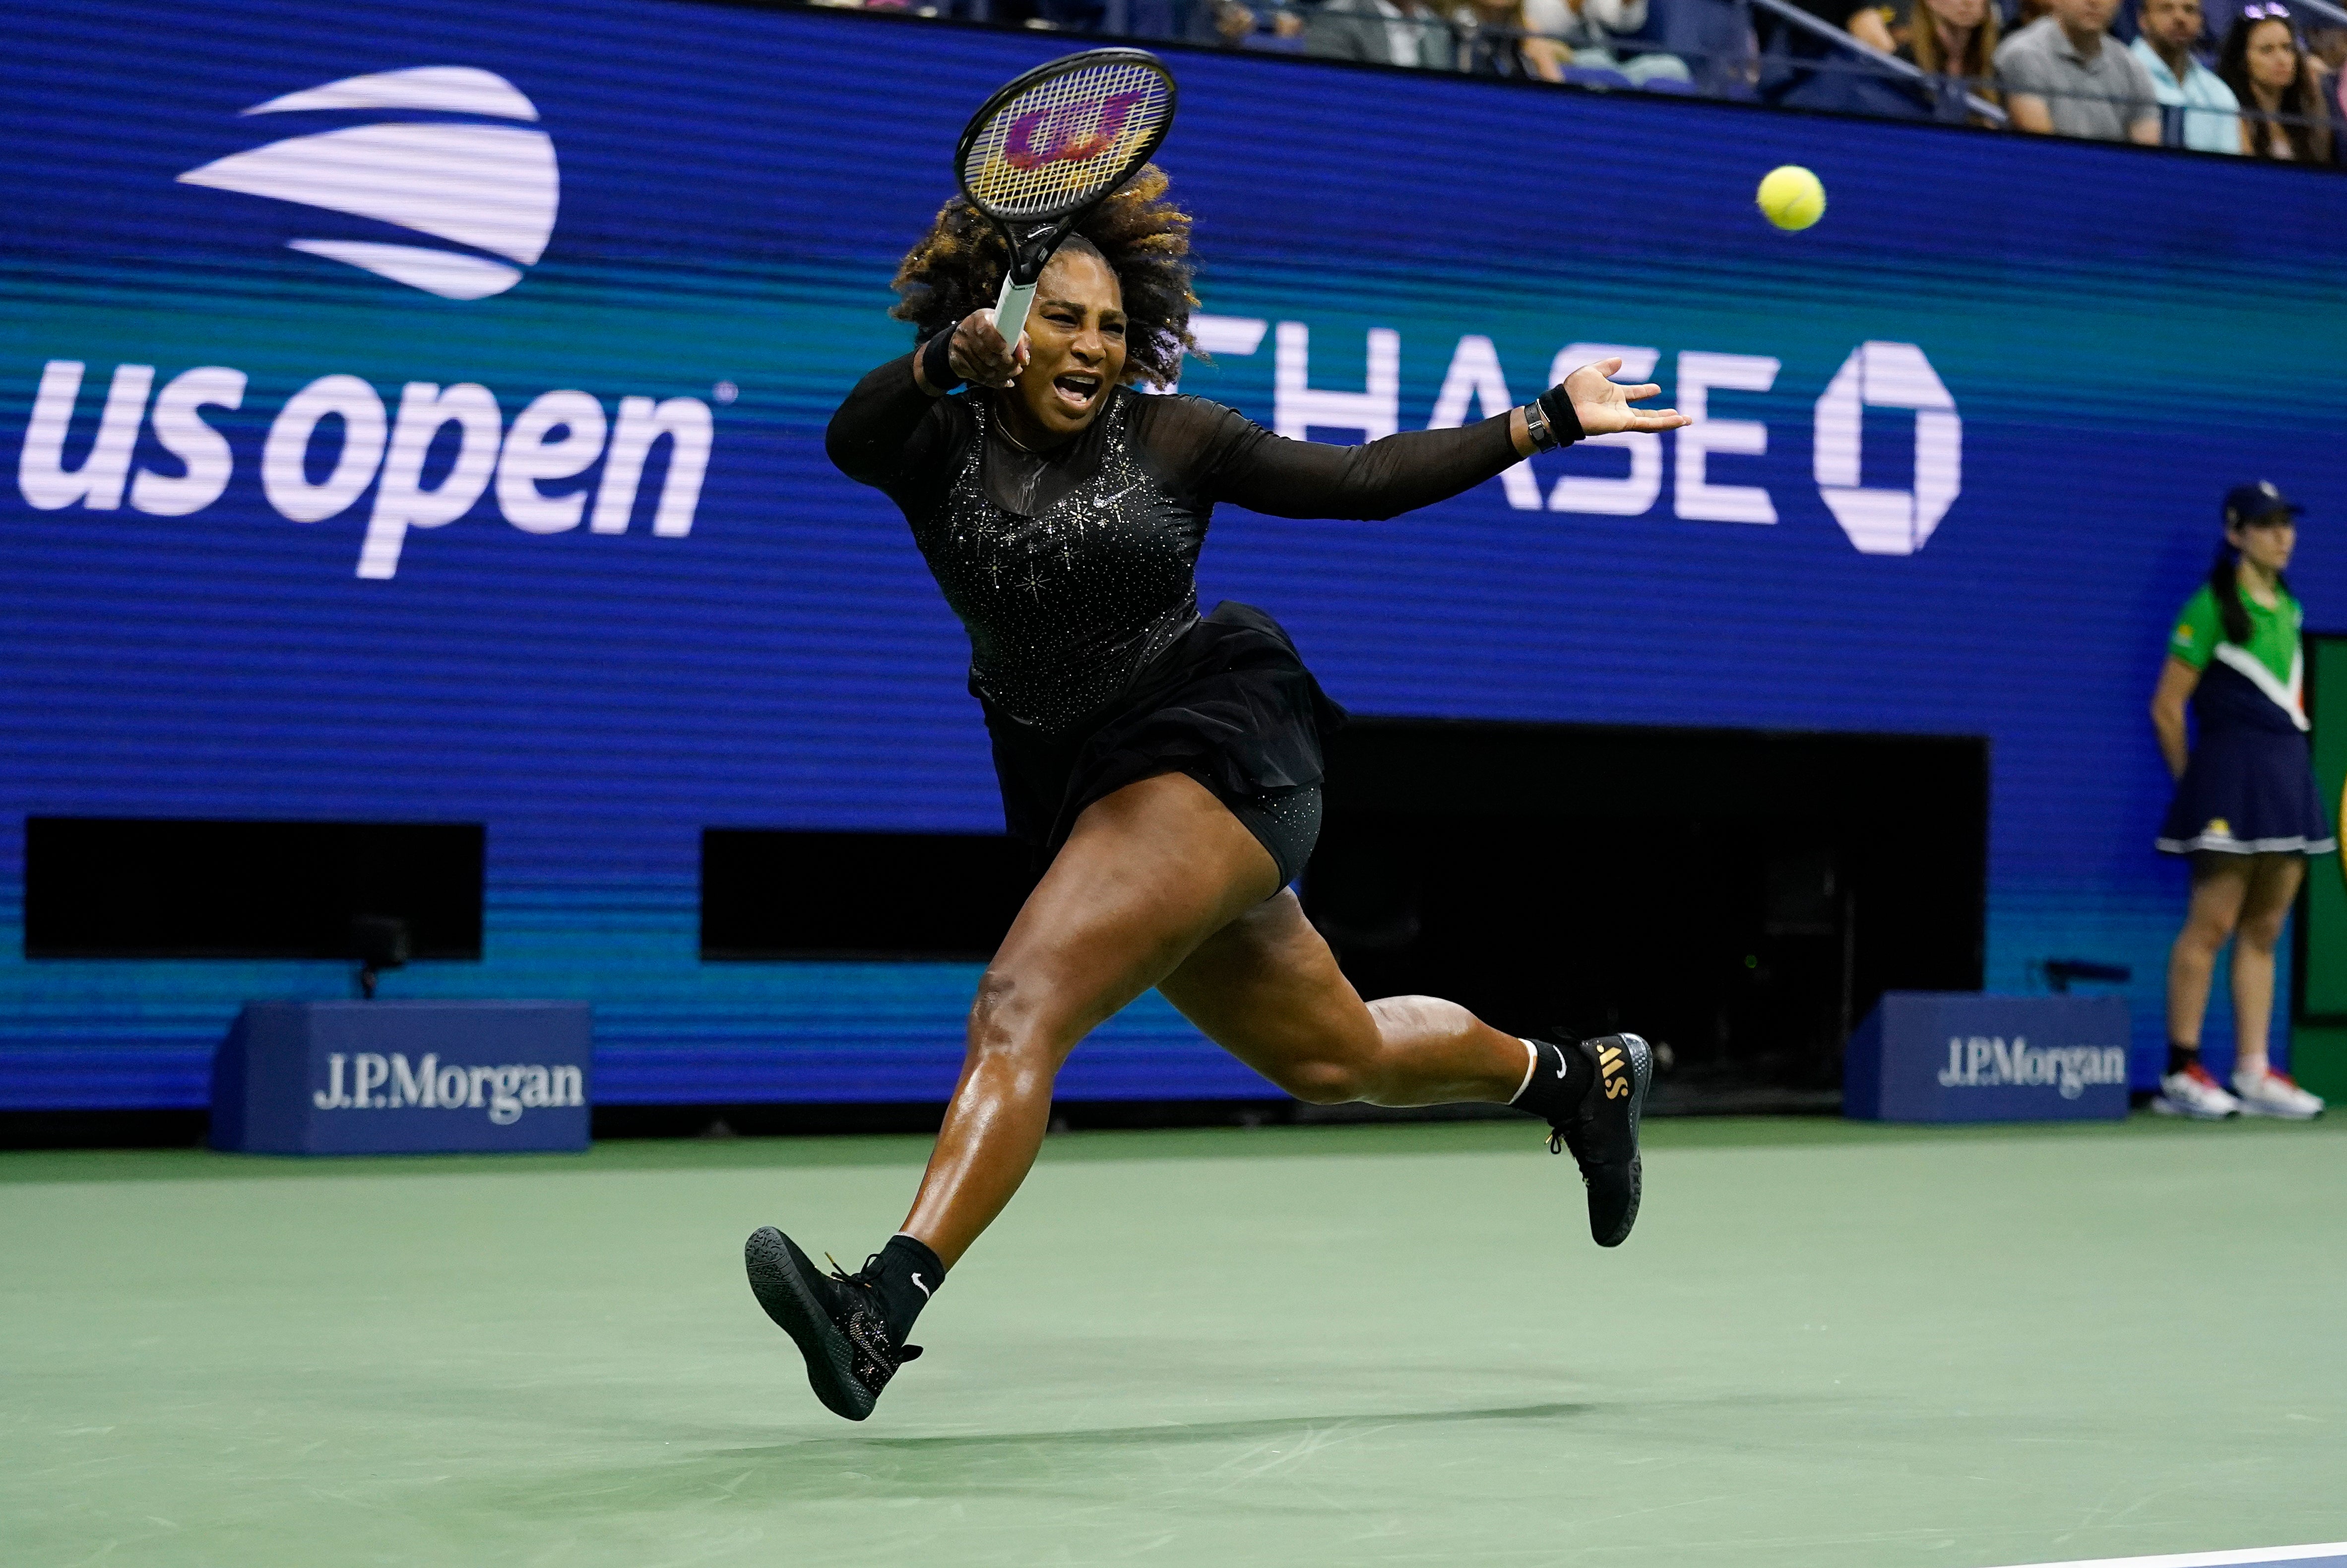 Serena Williams goodbye to U.S